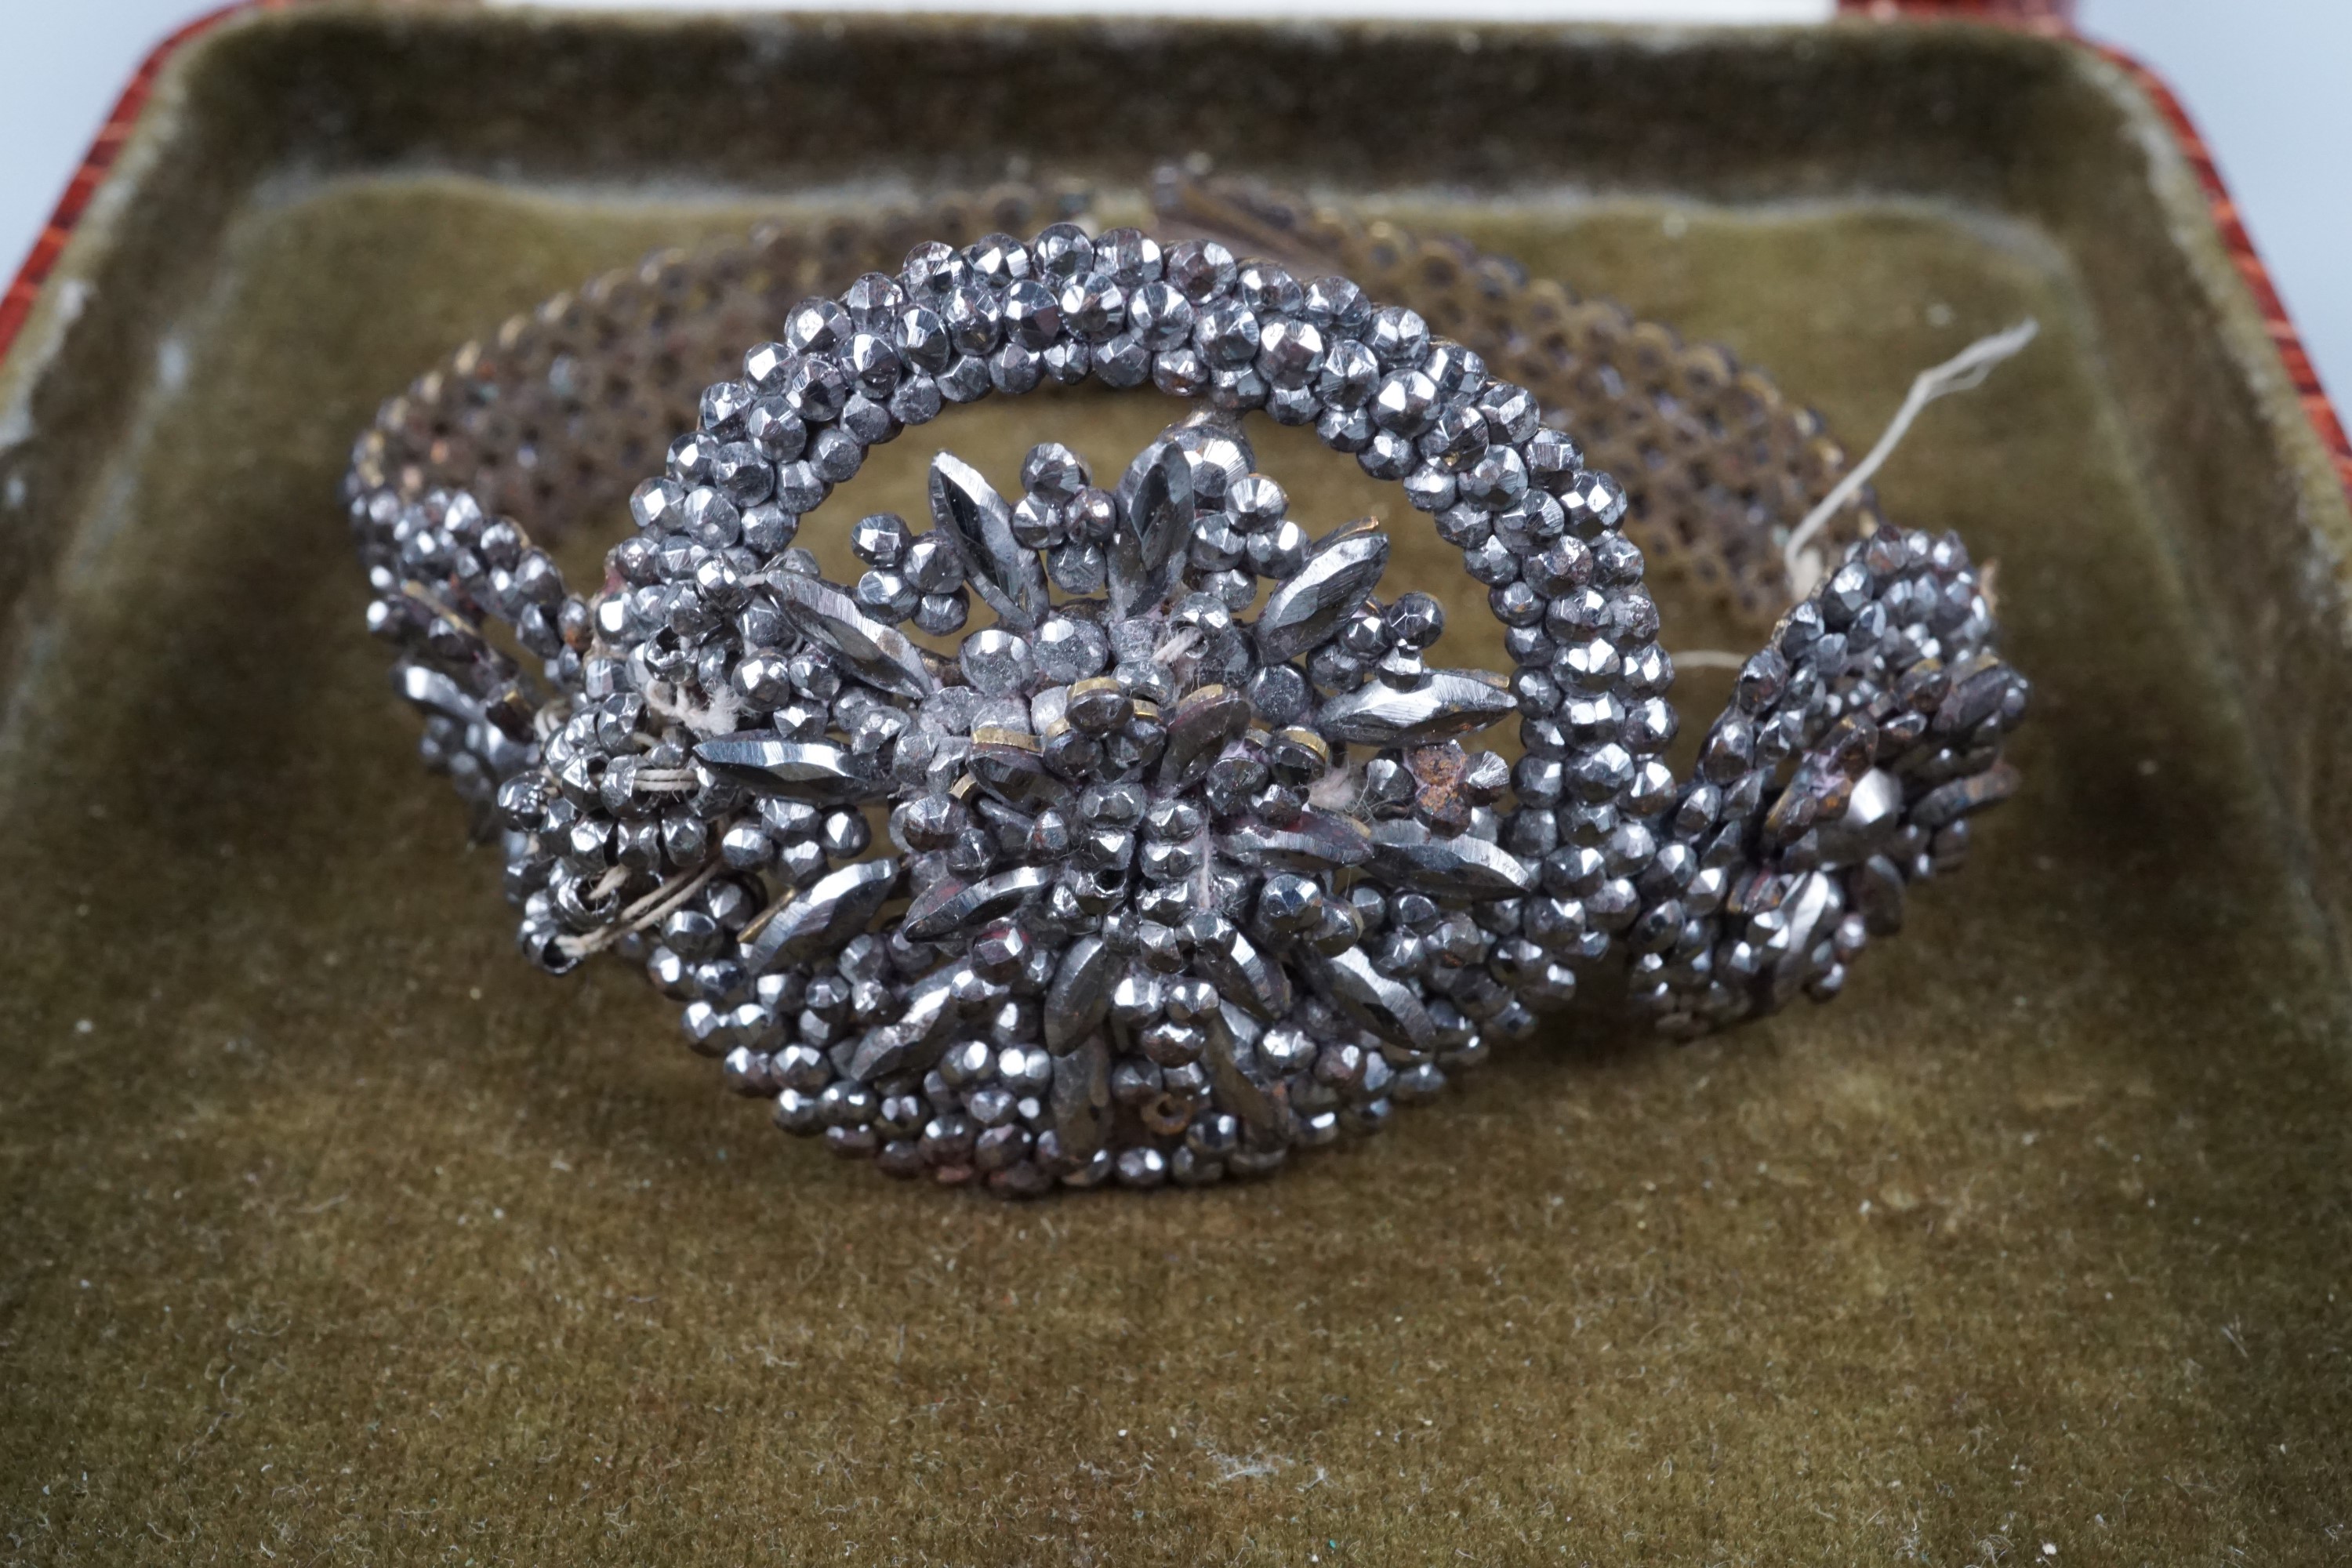 Antique cut steel jewellery parure, comprising pendant necklace, choker, bracelet, bangles, - Image 2 of 5